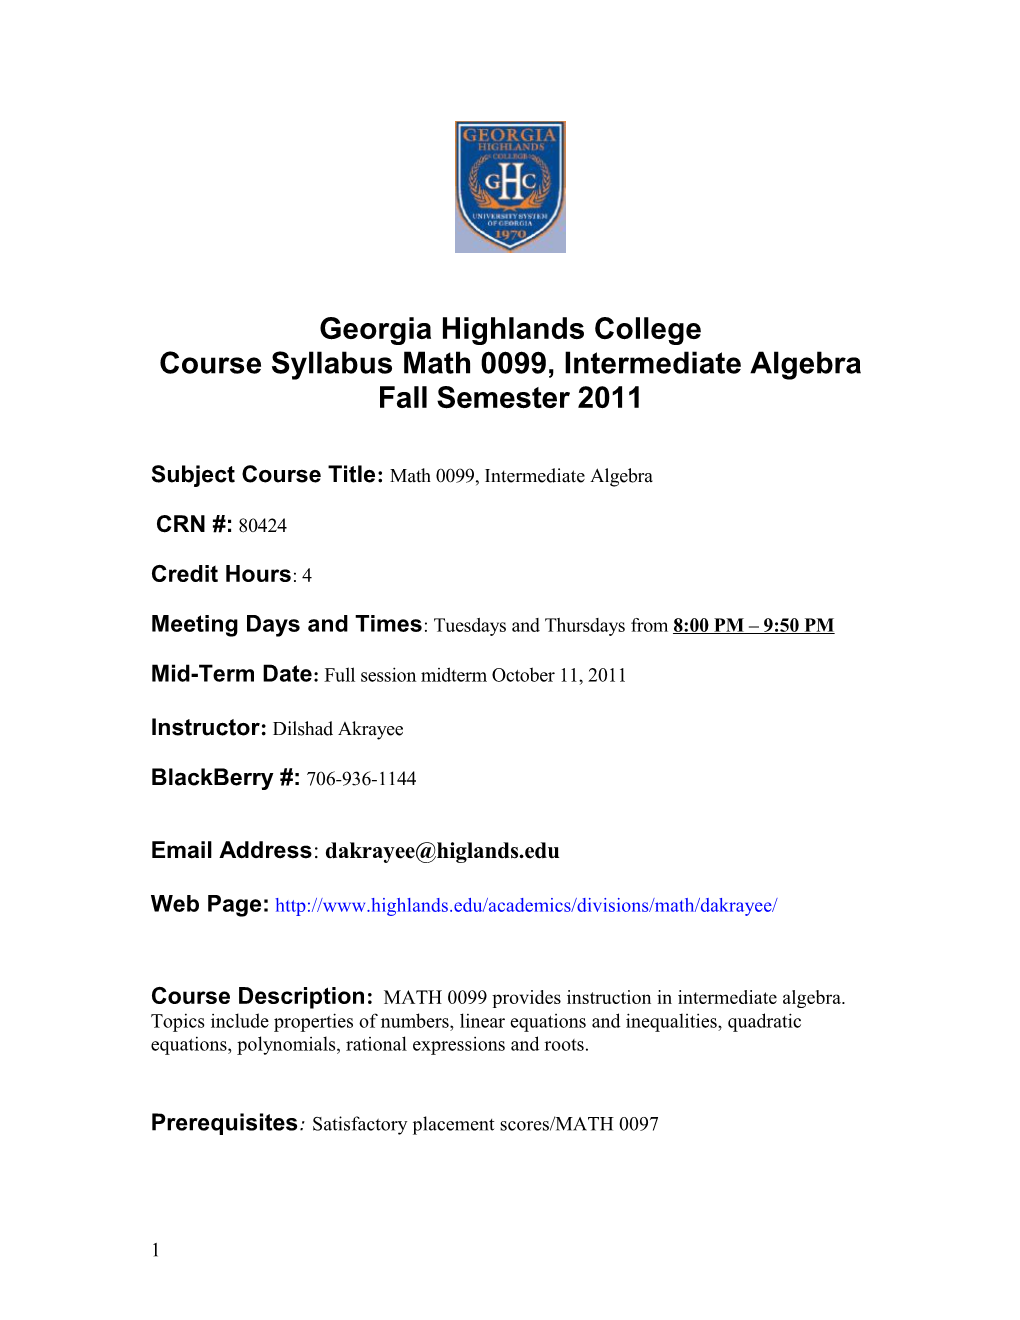 Course Syllabus Math 0099, Intermediate Algebra